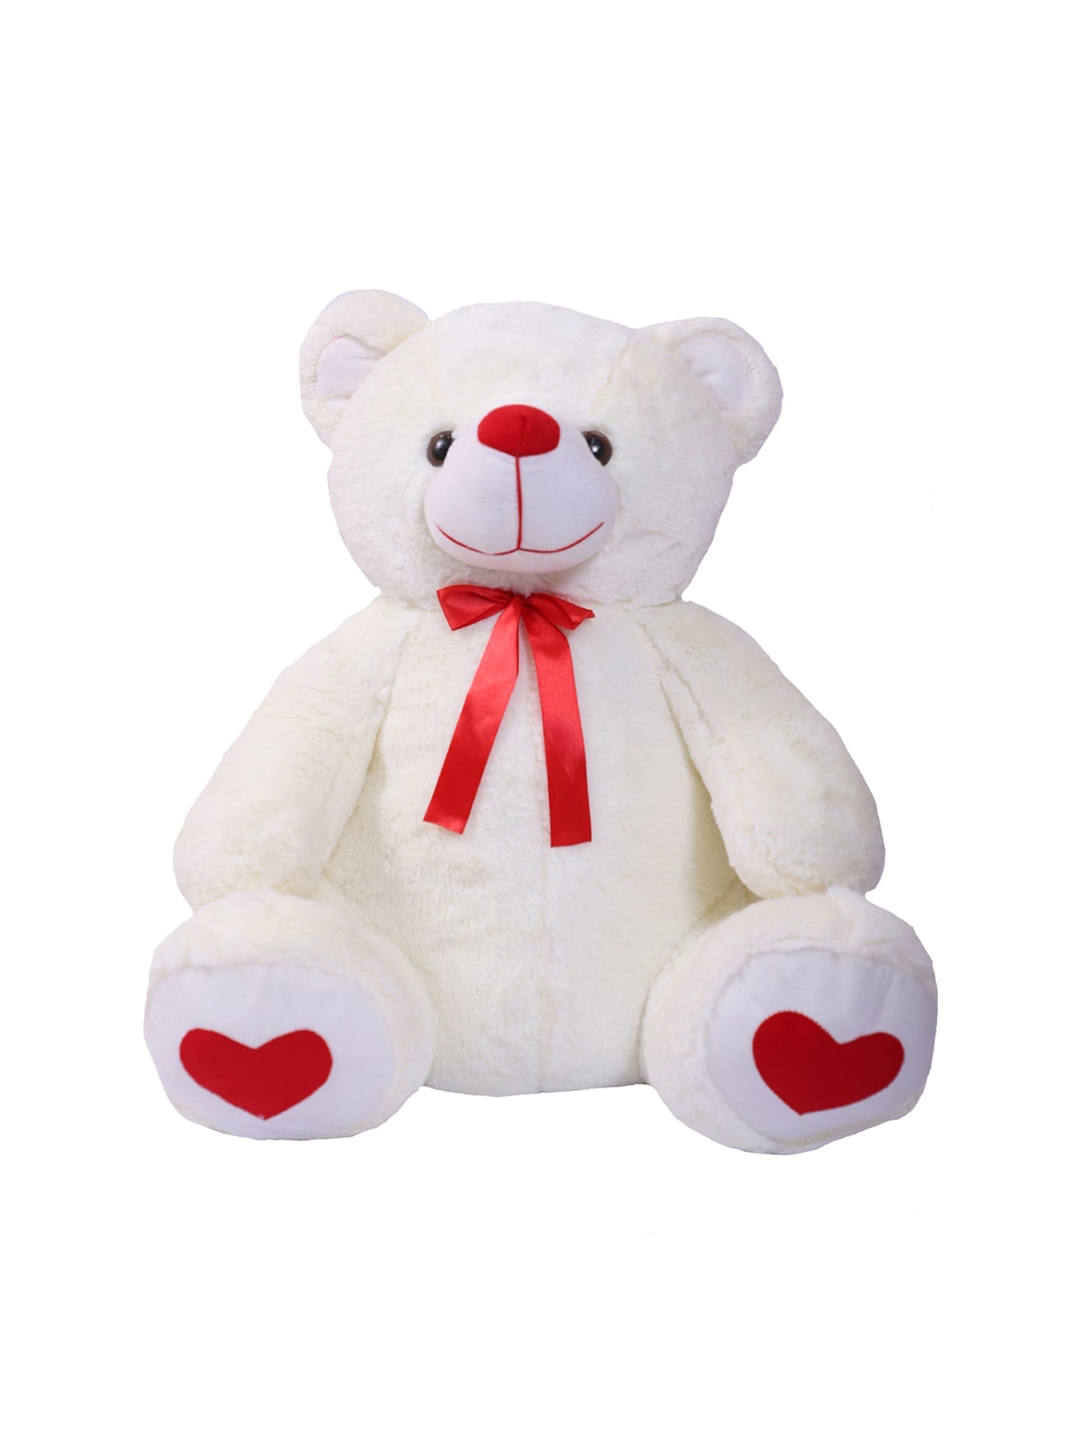 Ultra Unisex Kids White   Red Teddy Bear Soft Plush Toy